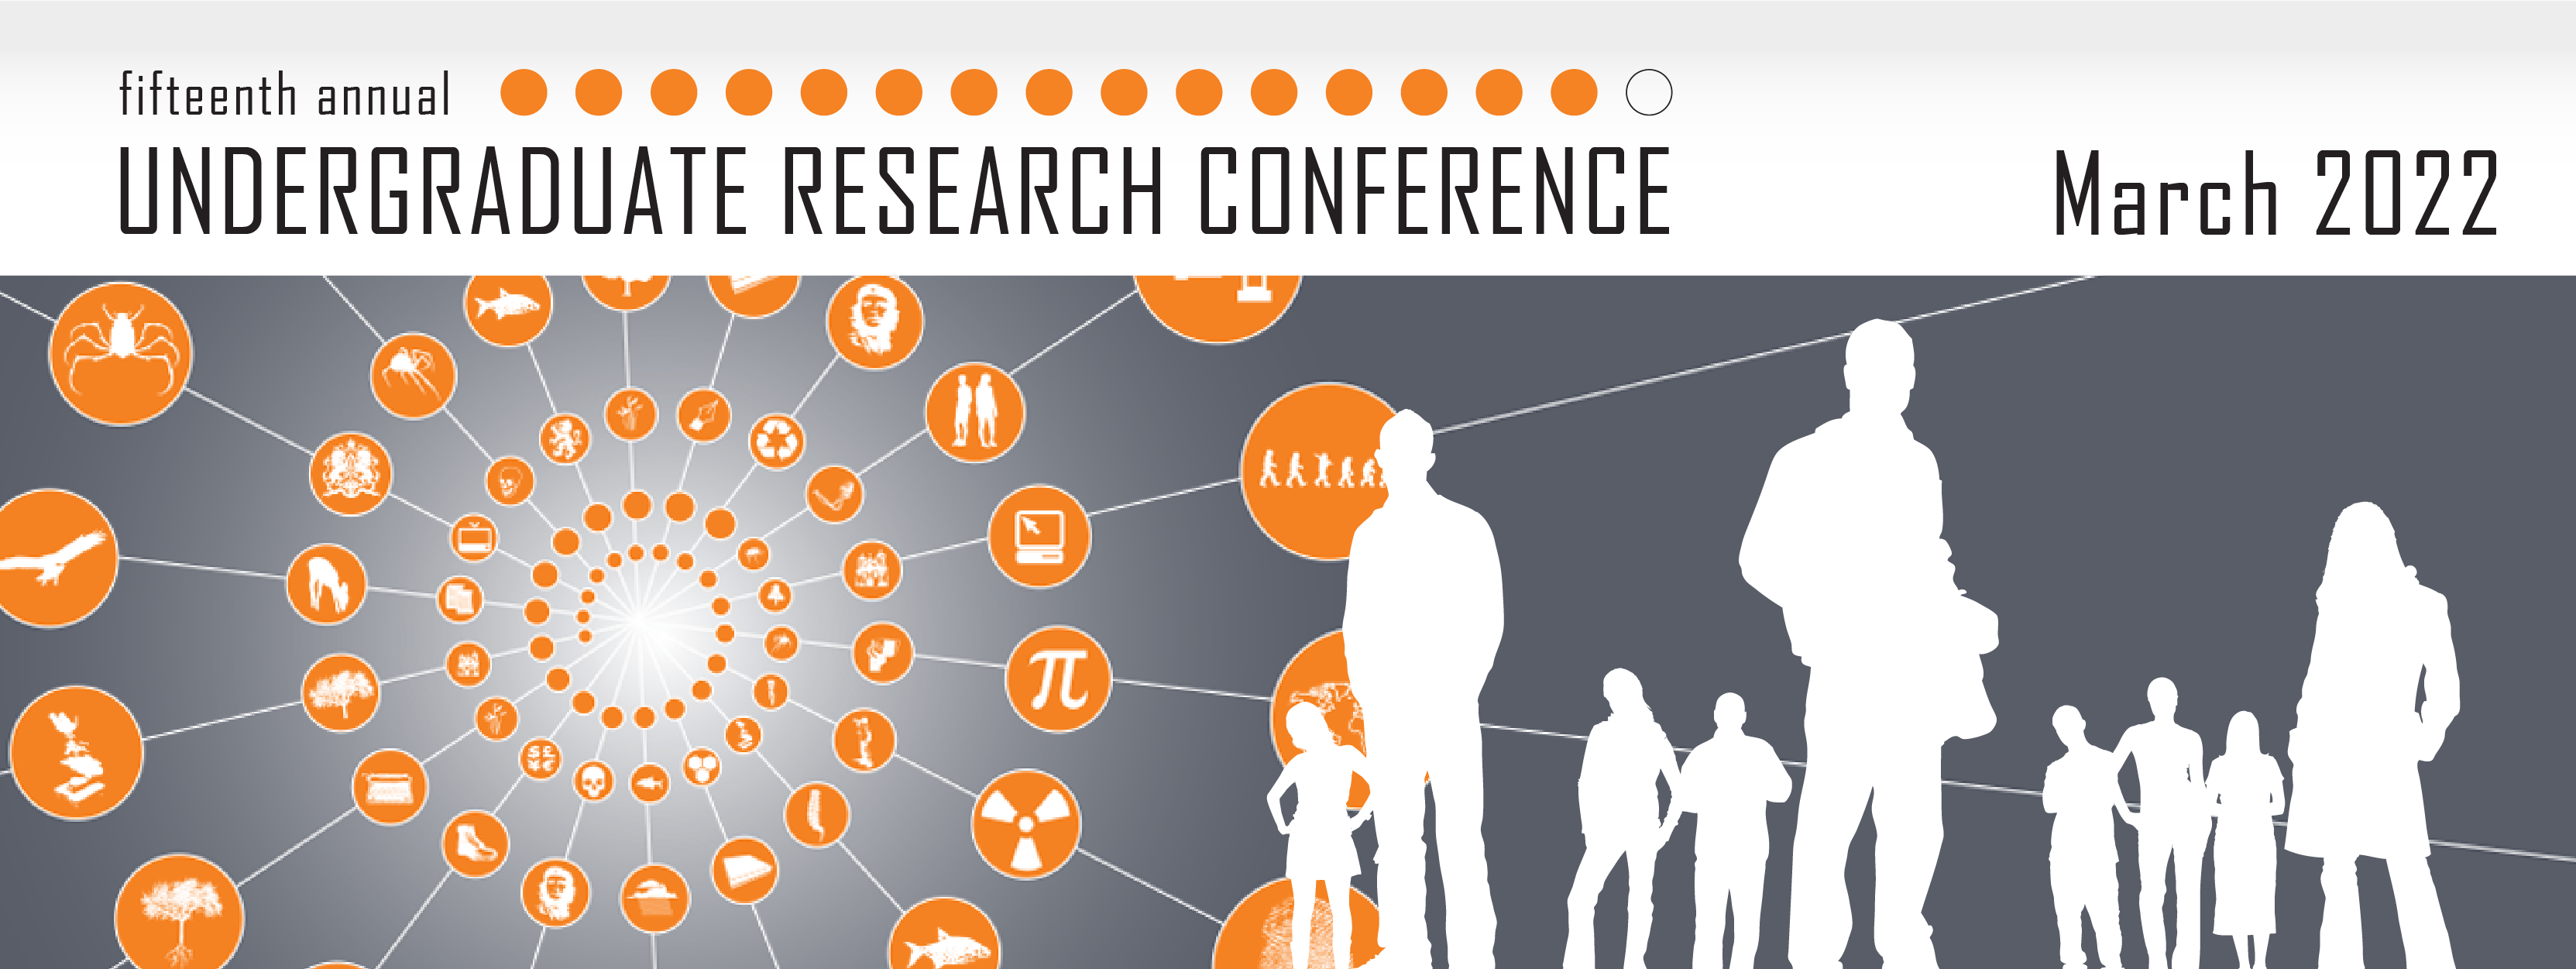 Undergraduate Research Conference 2022